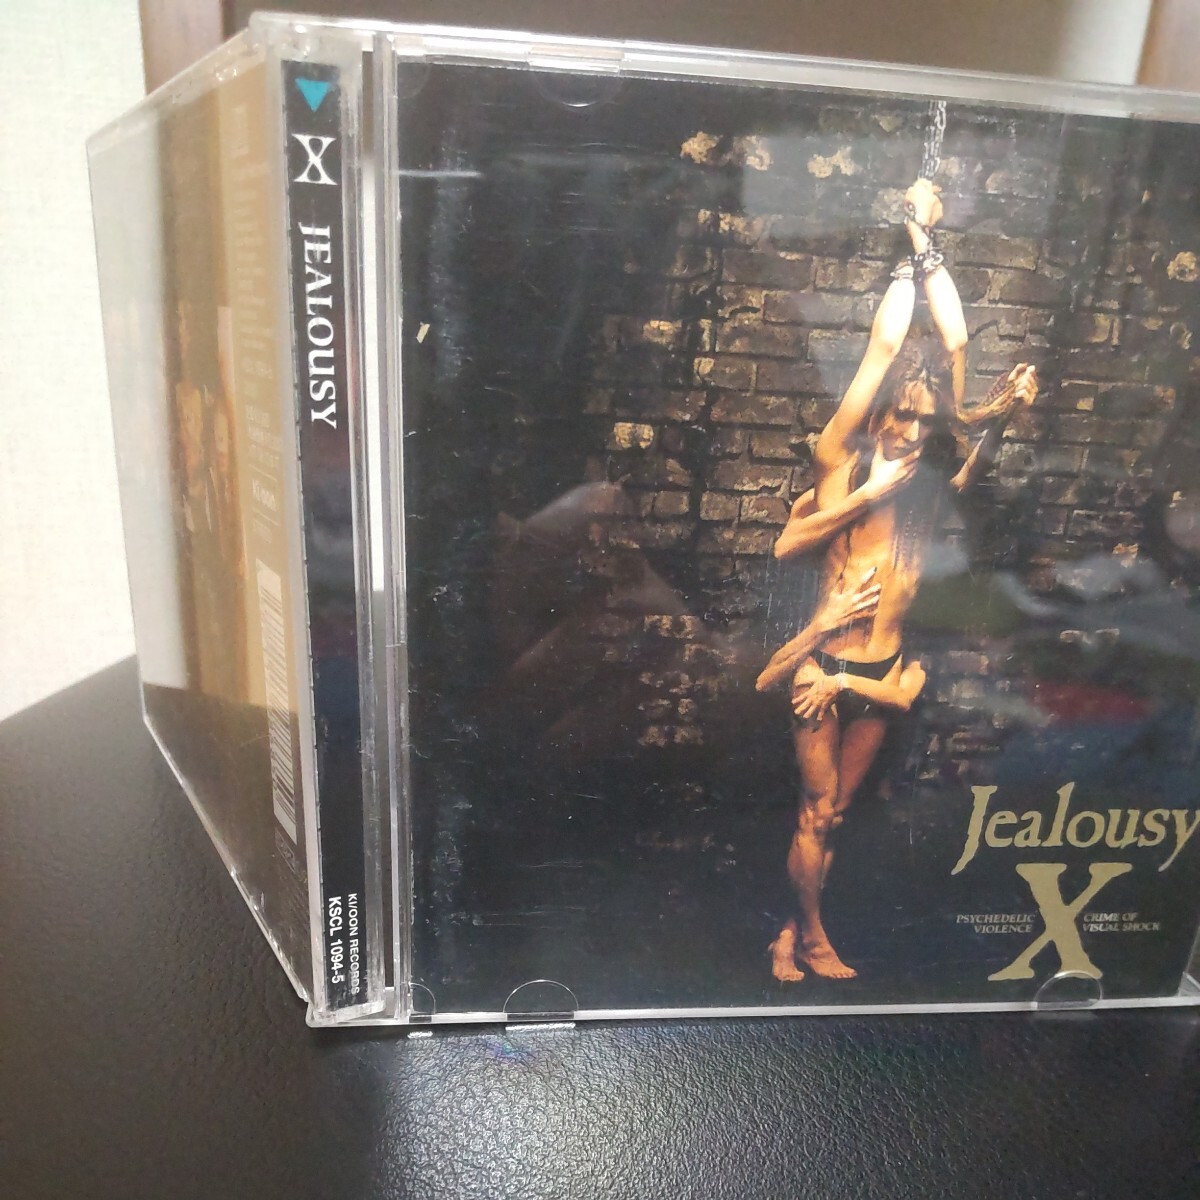 X (X JAPAN) JEALOUSY SPECIAL EDITION 2 листов комплект CD